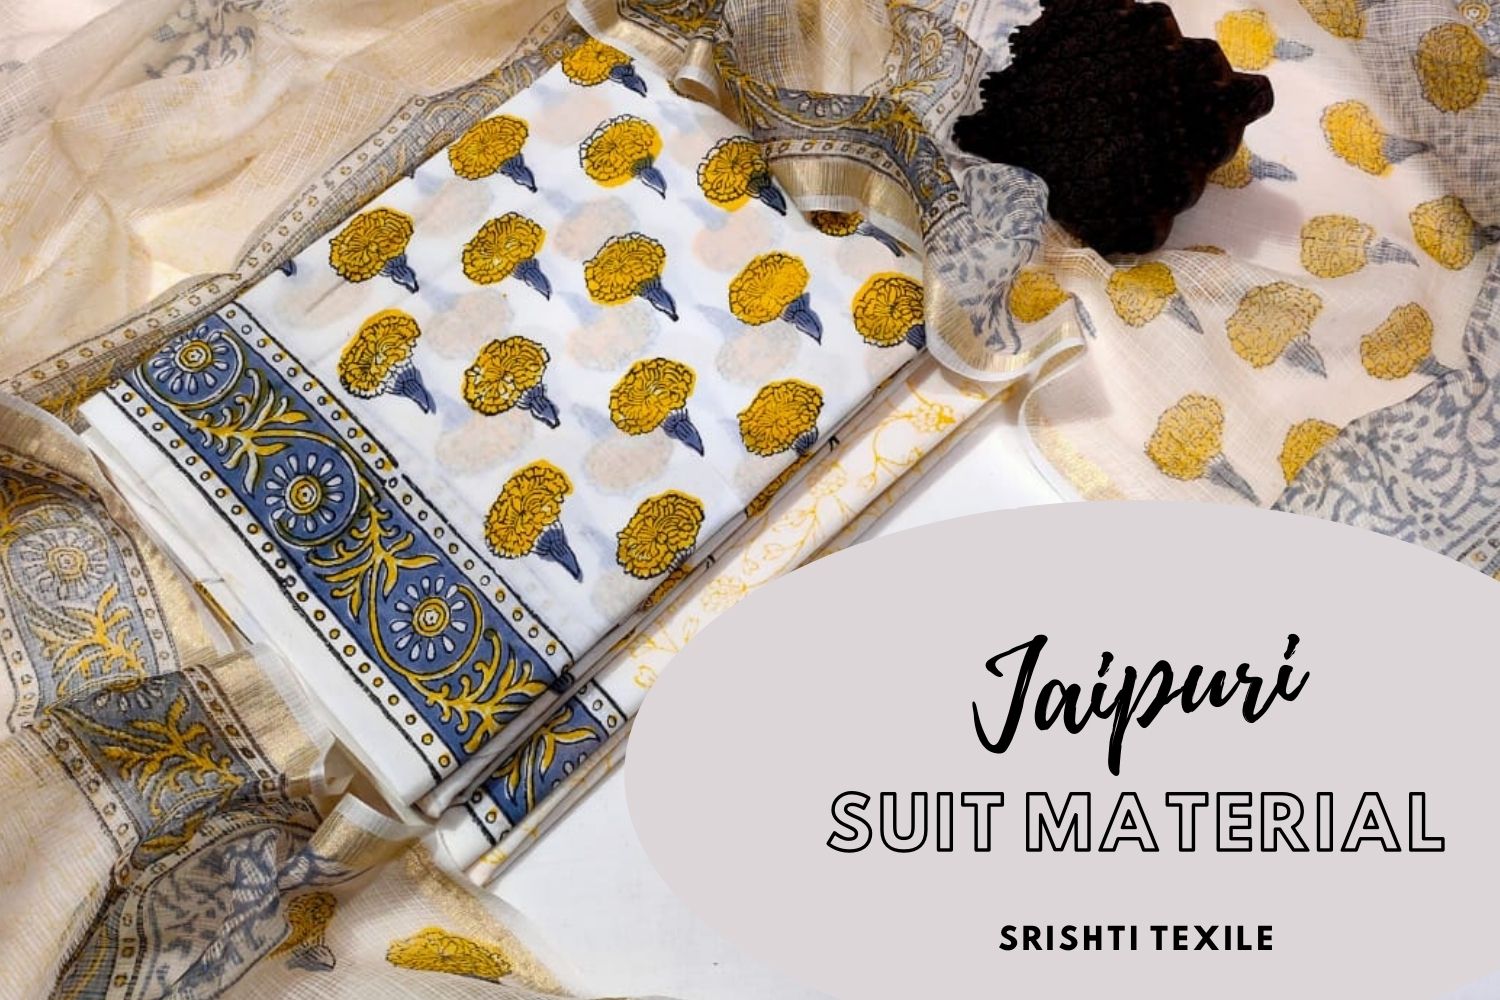 Formal Wear Normal Salwar Printed Cotton Dress Material In Jaipur at Rs  950/piece in Jaipur